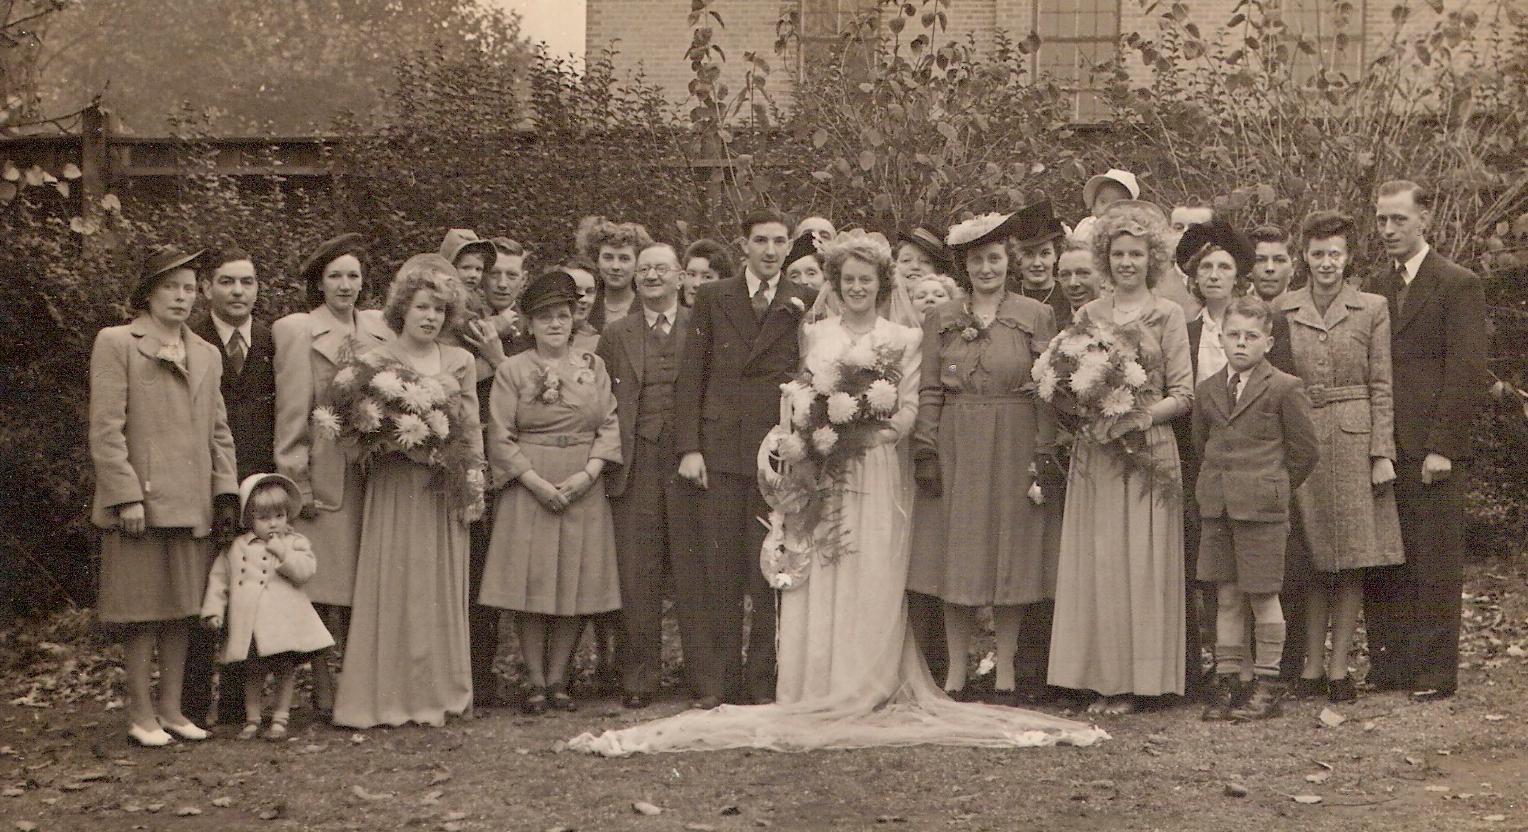 Edna May Bailey & James Benjamin Bailey, wedding day group photo, with Ivy Thompson, Eddie Thompson, 18th October 1947, Alum Rock, Birmingham, England